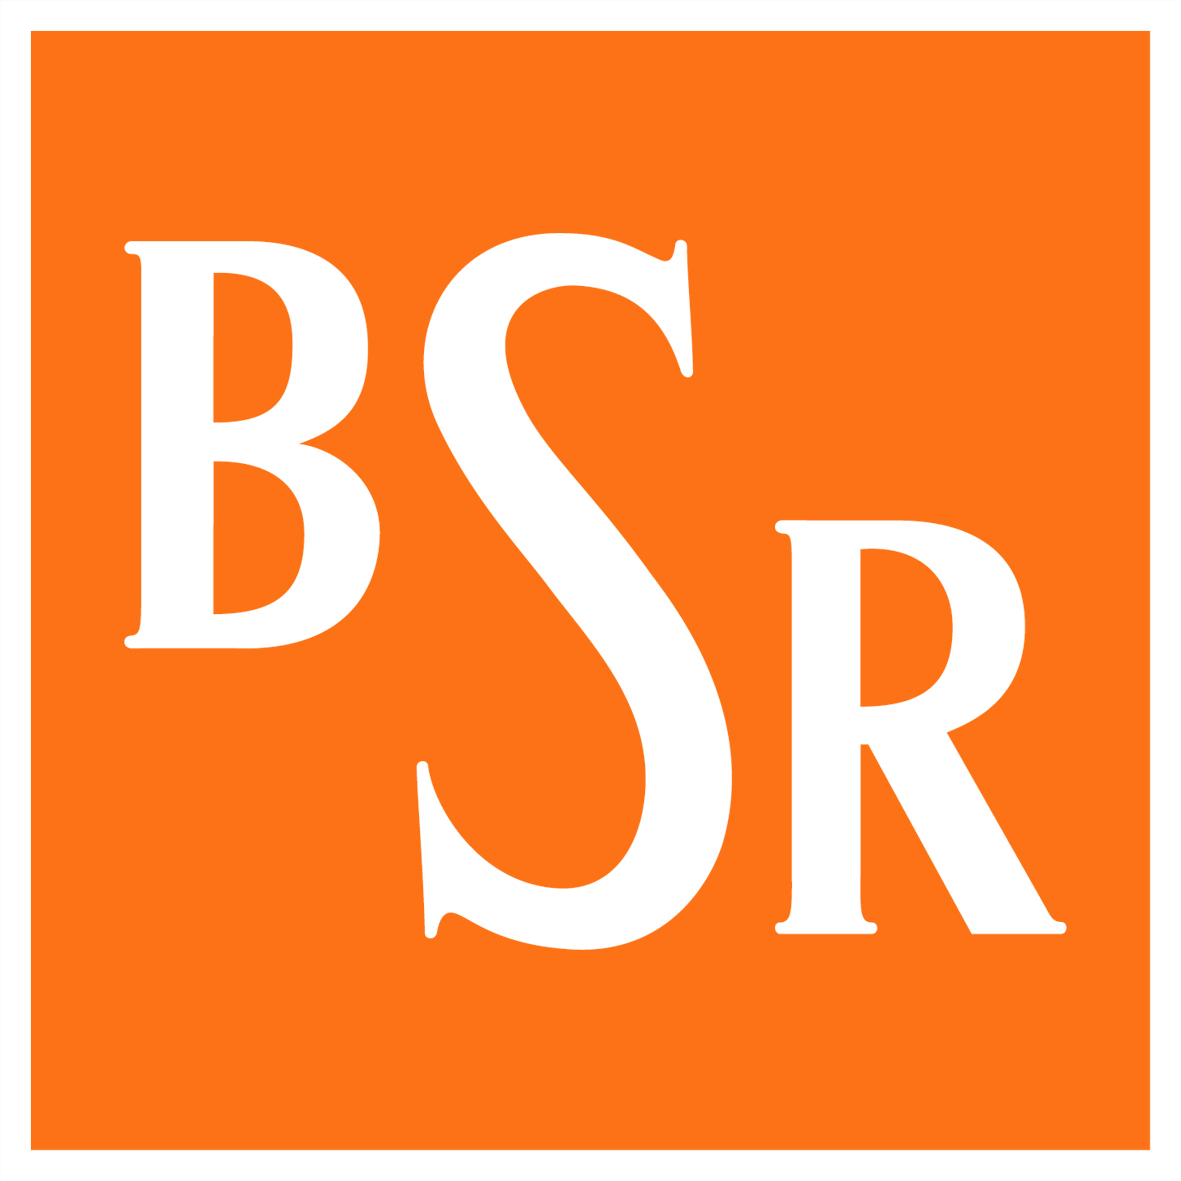 Logo BSR